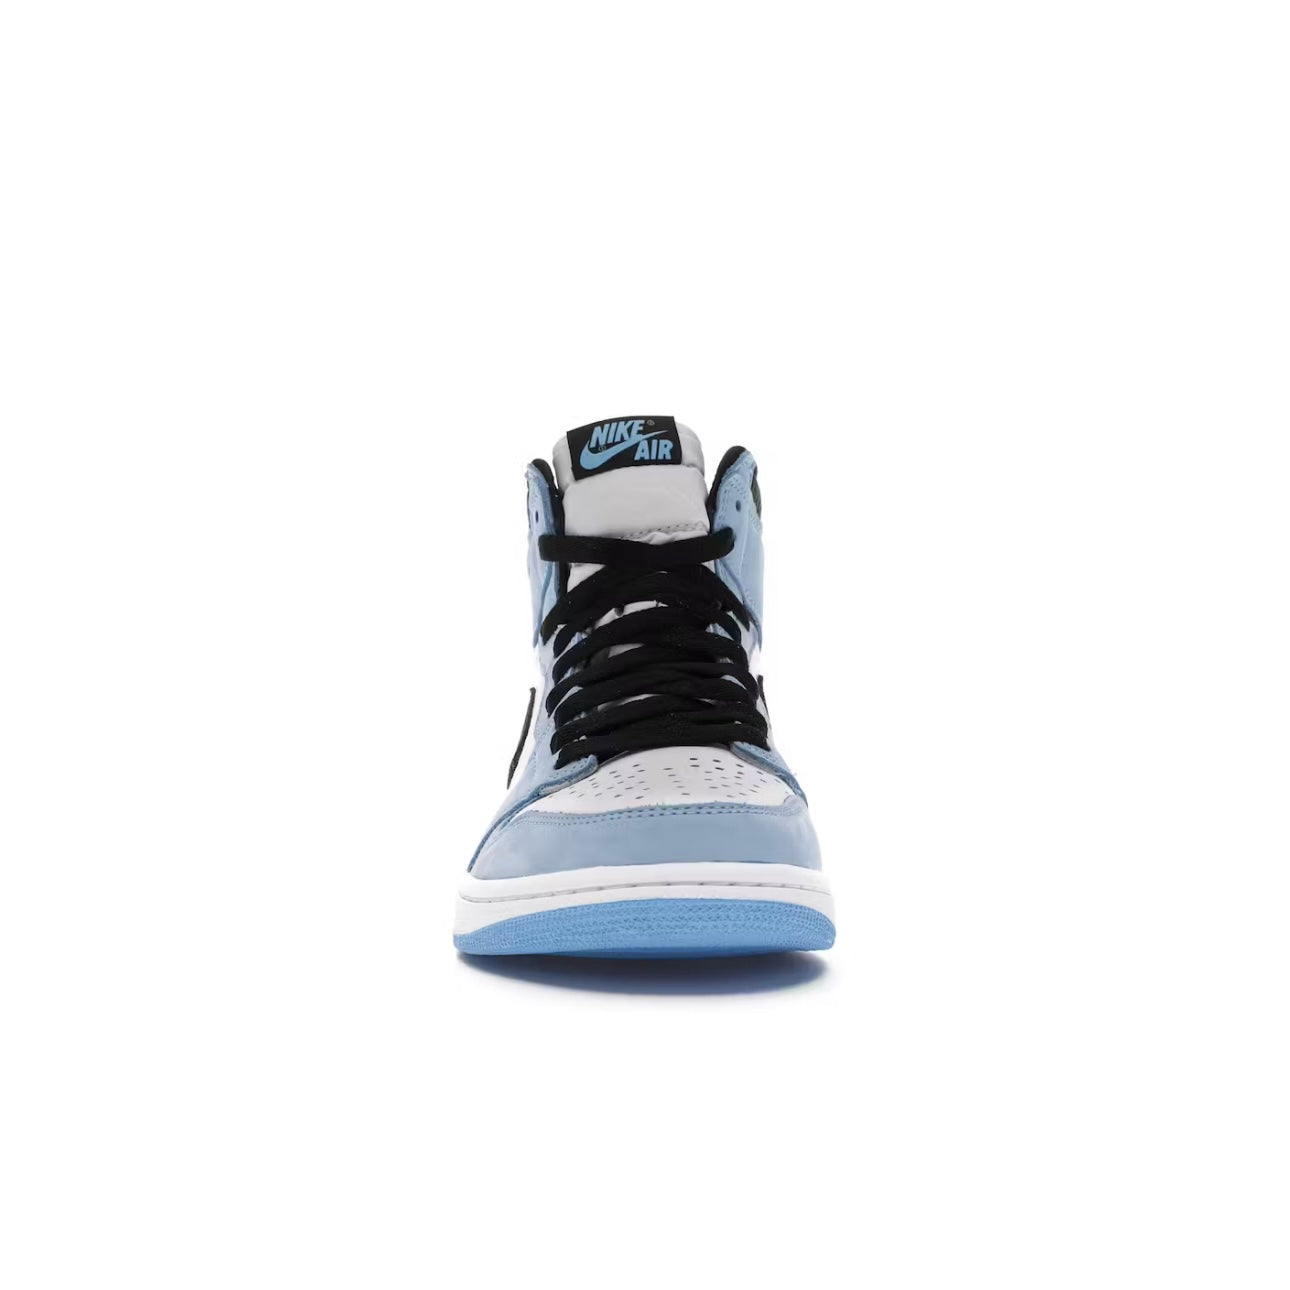 Air Jordan 1 Retro High OG en azul - PENGUIN SHOES Penguin shoes